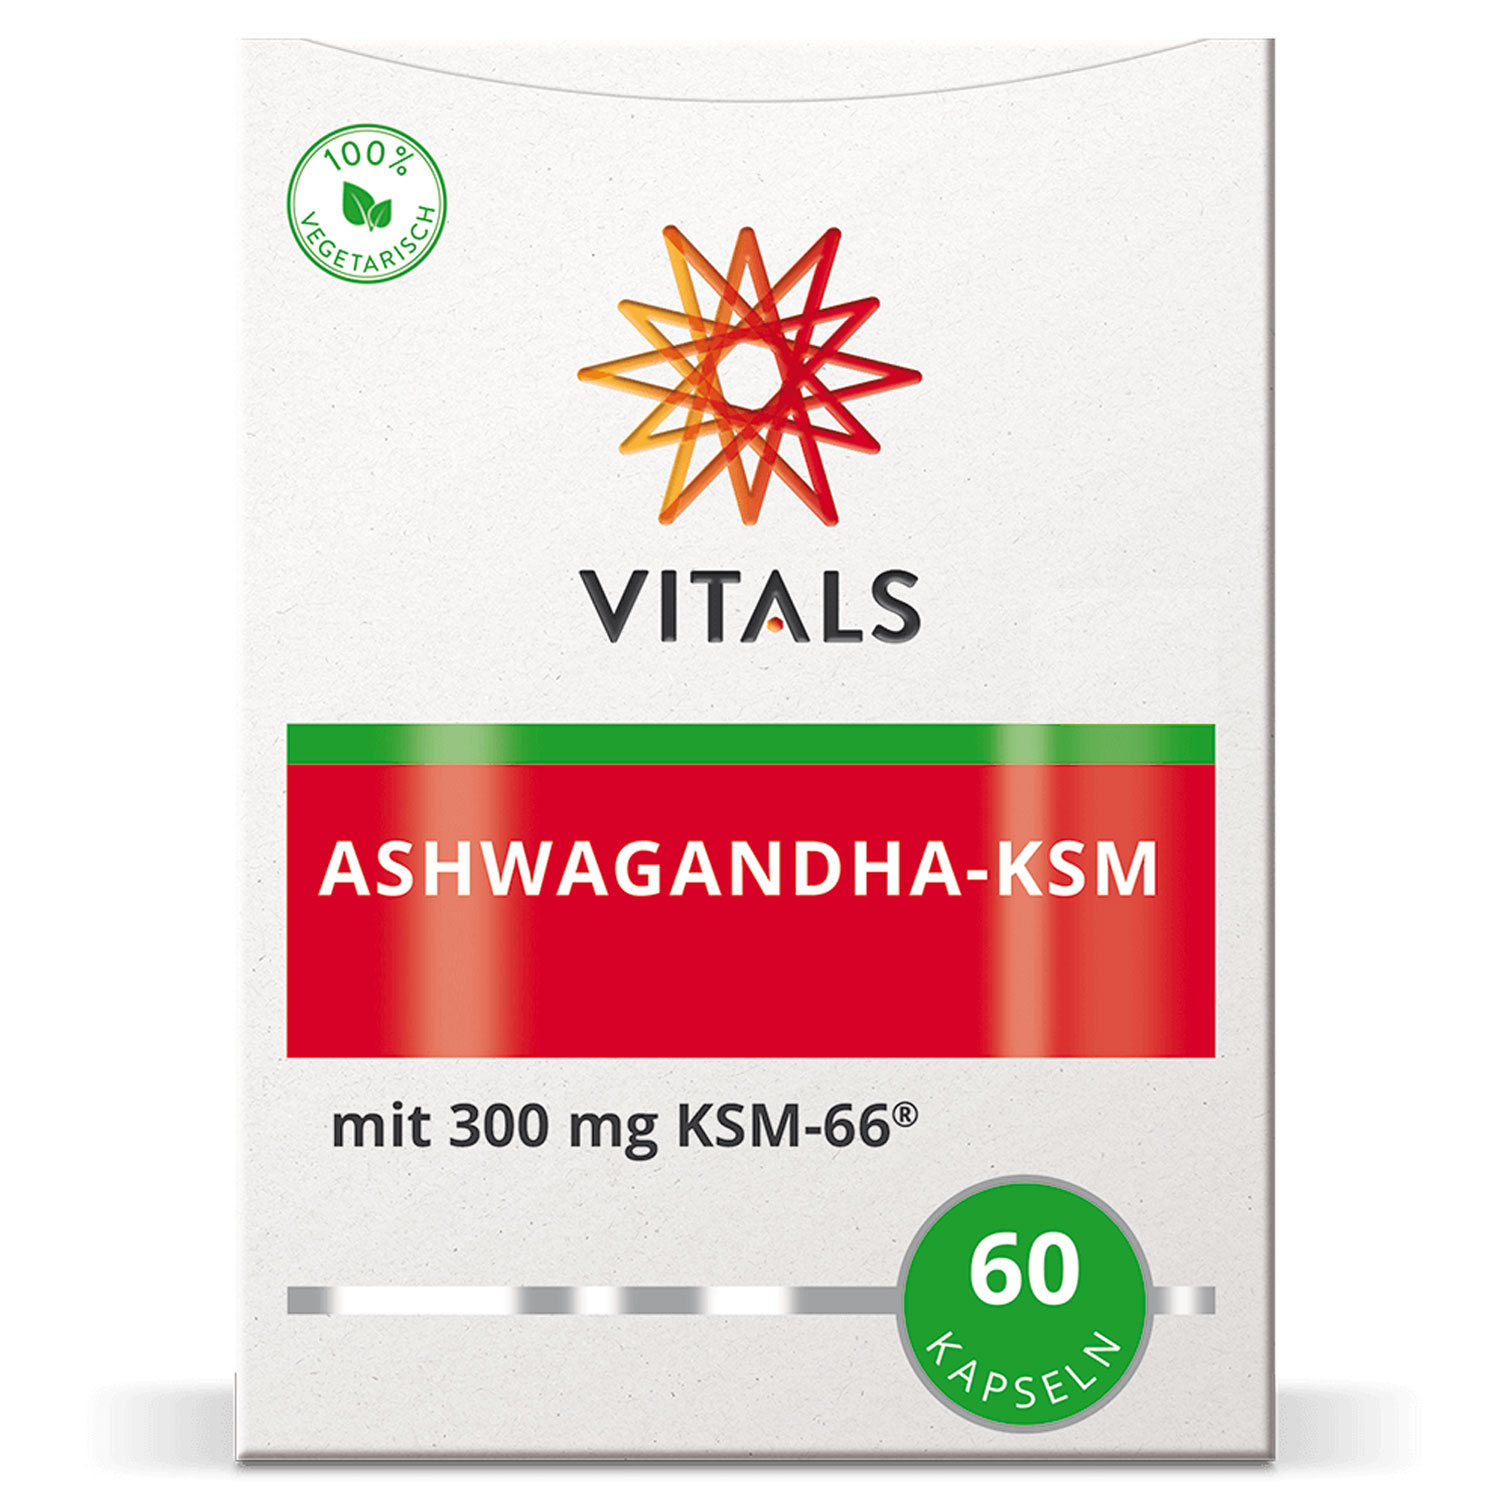 Ashwagandha-KSM von Vitals 60 - Verpackung